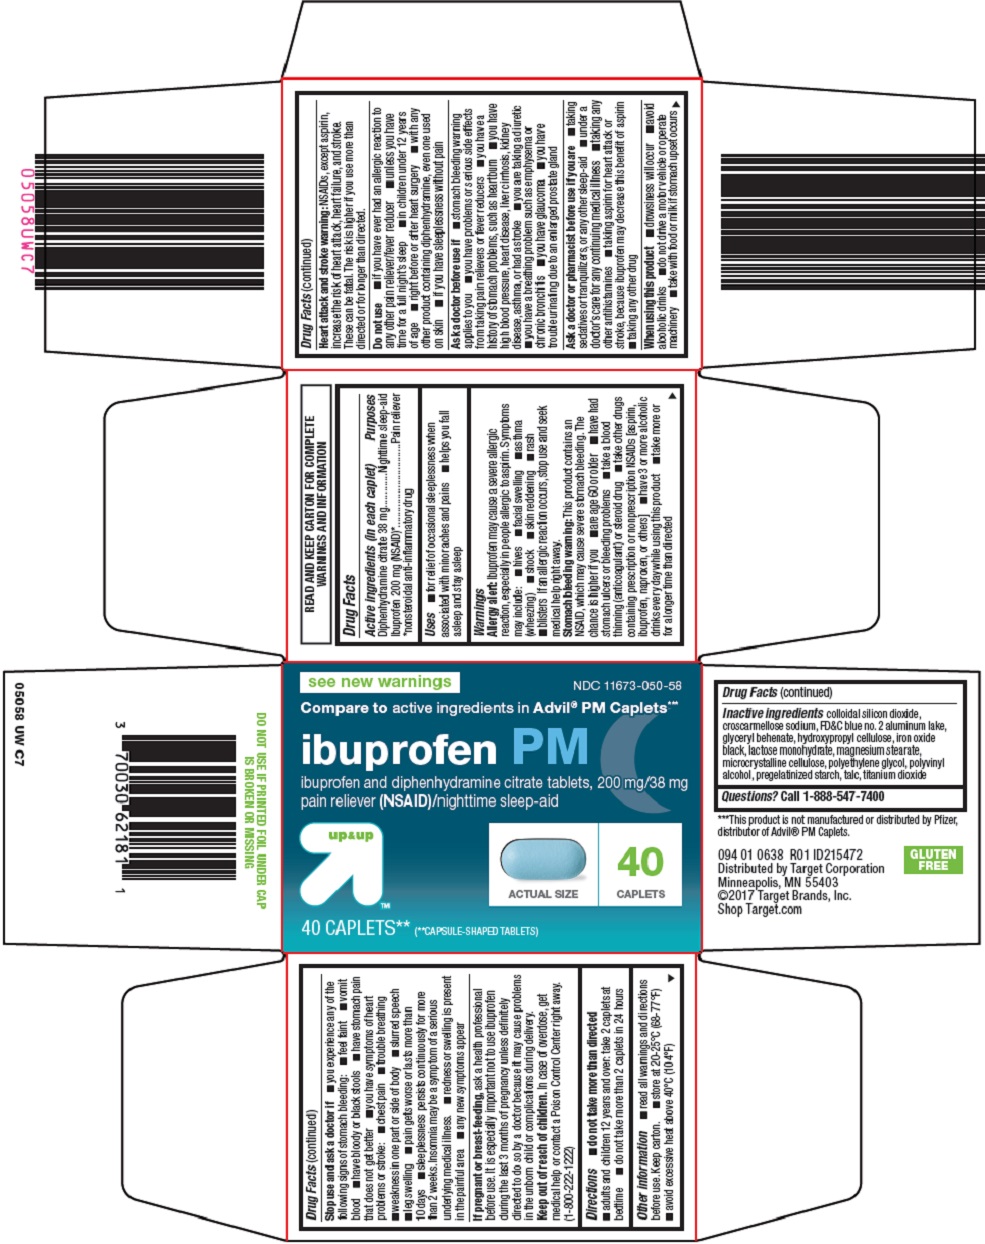 ibuprofen PM image